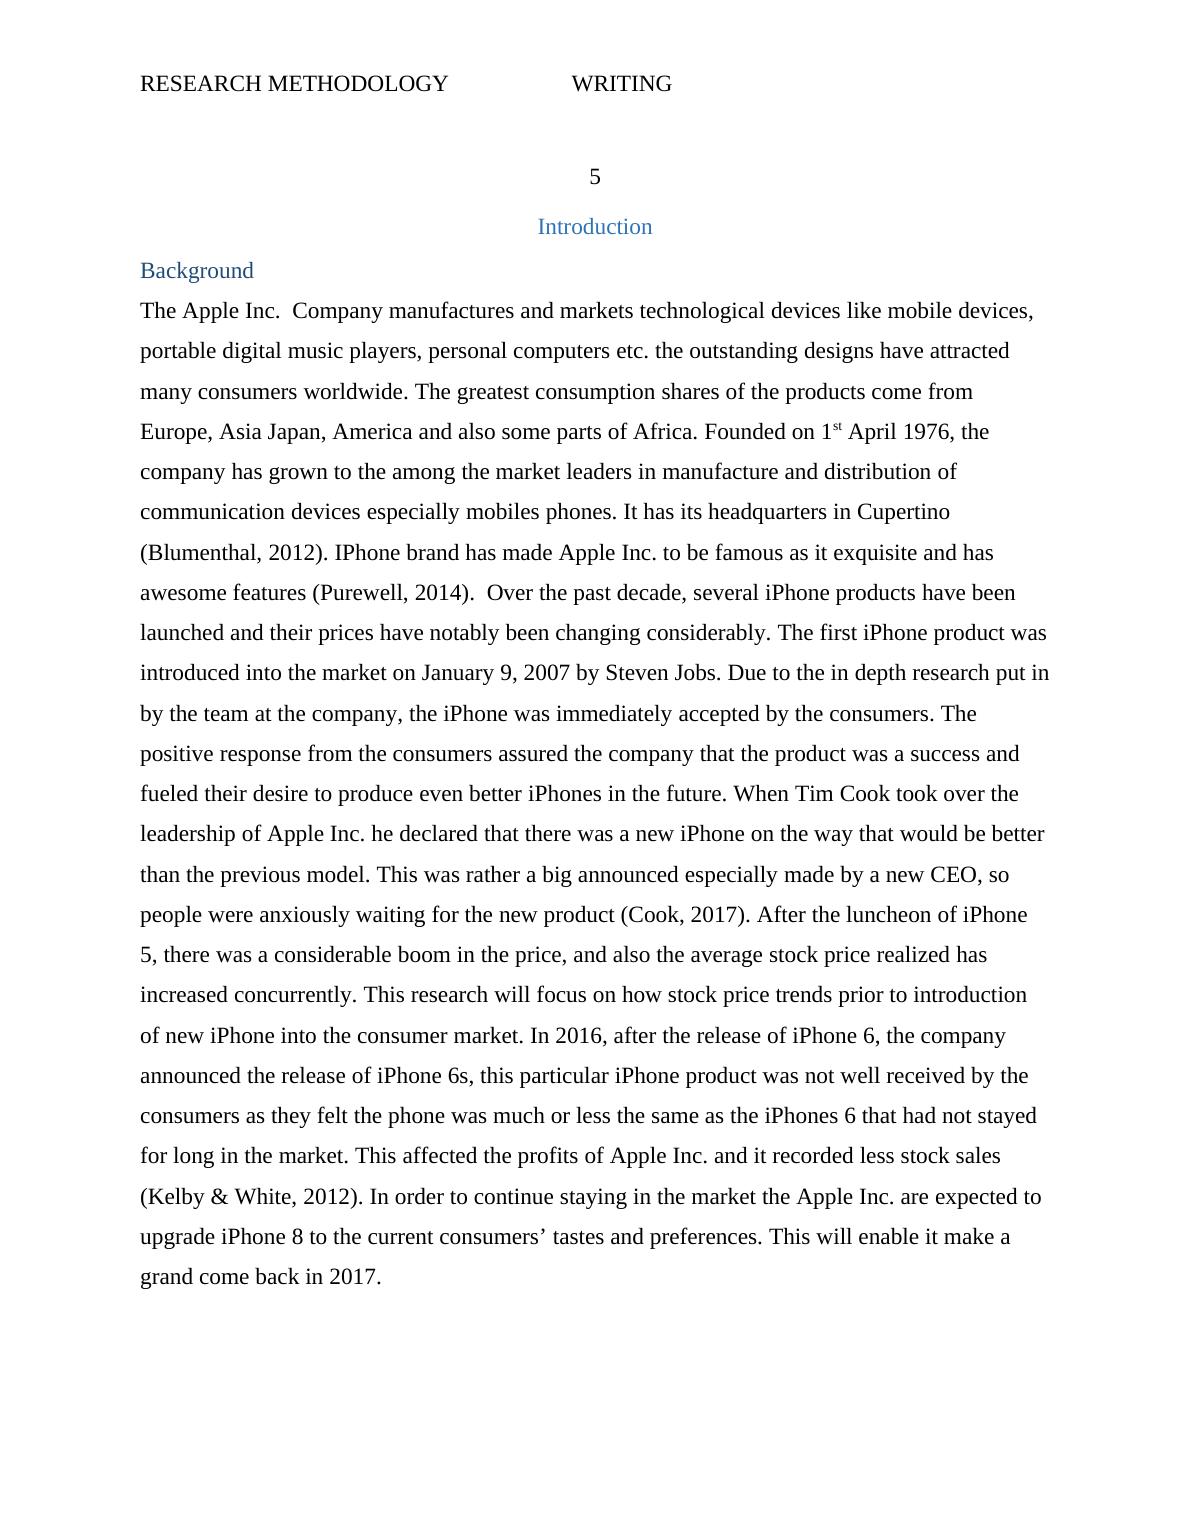 Apple Inc. Case Study: An Empirical Analysis_5